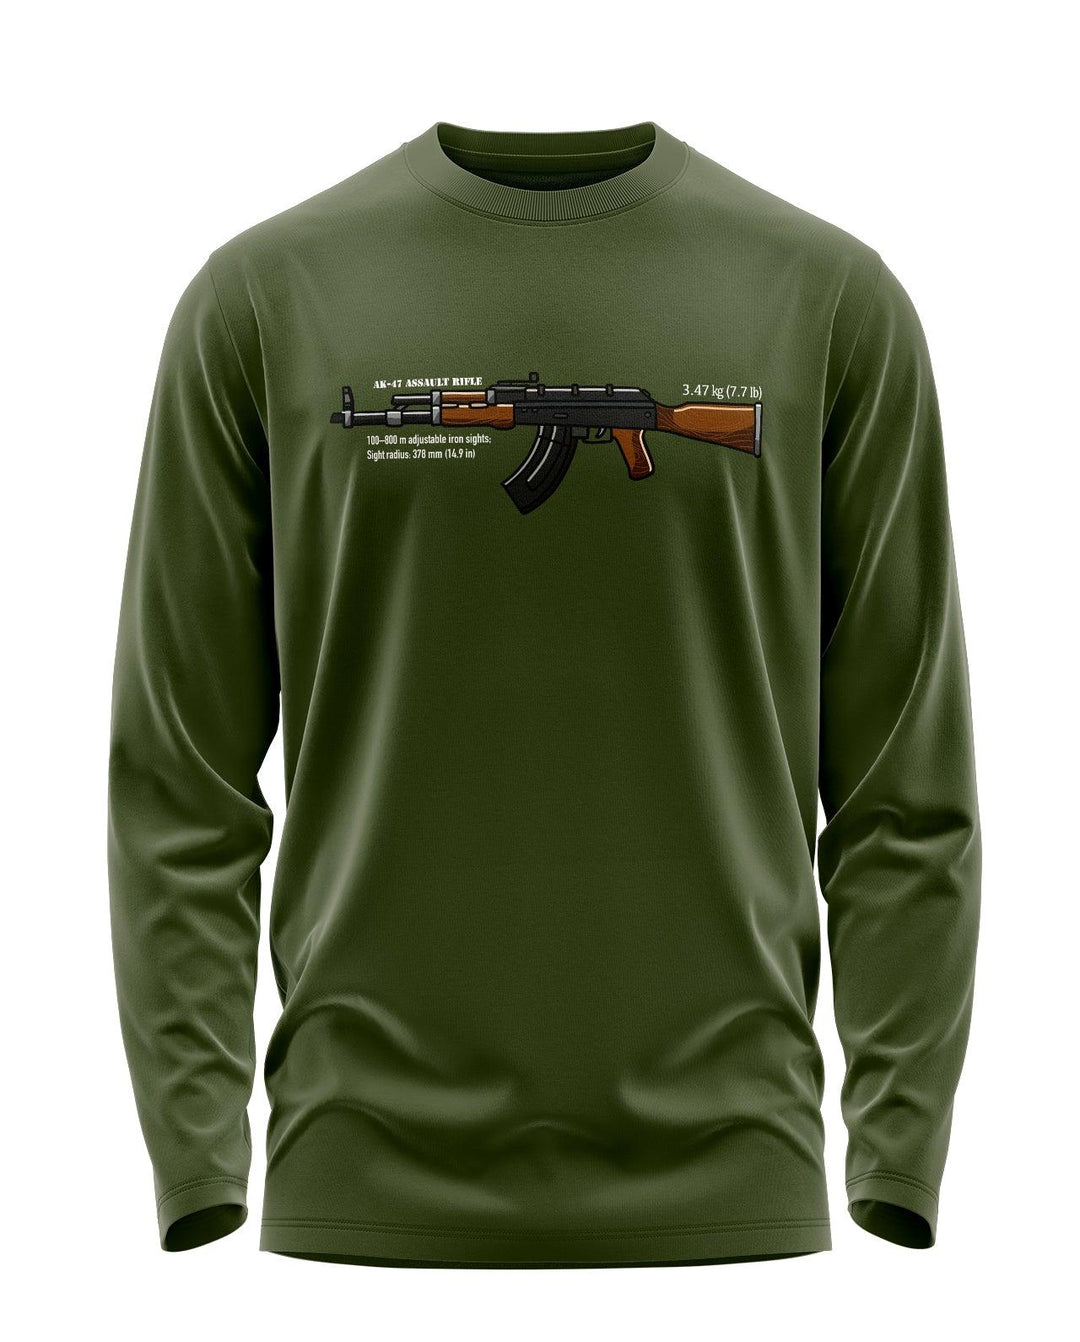 AK-47 Army Full Sleeve T-Shirt - Aero Armour